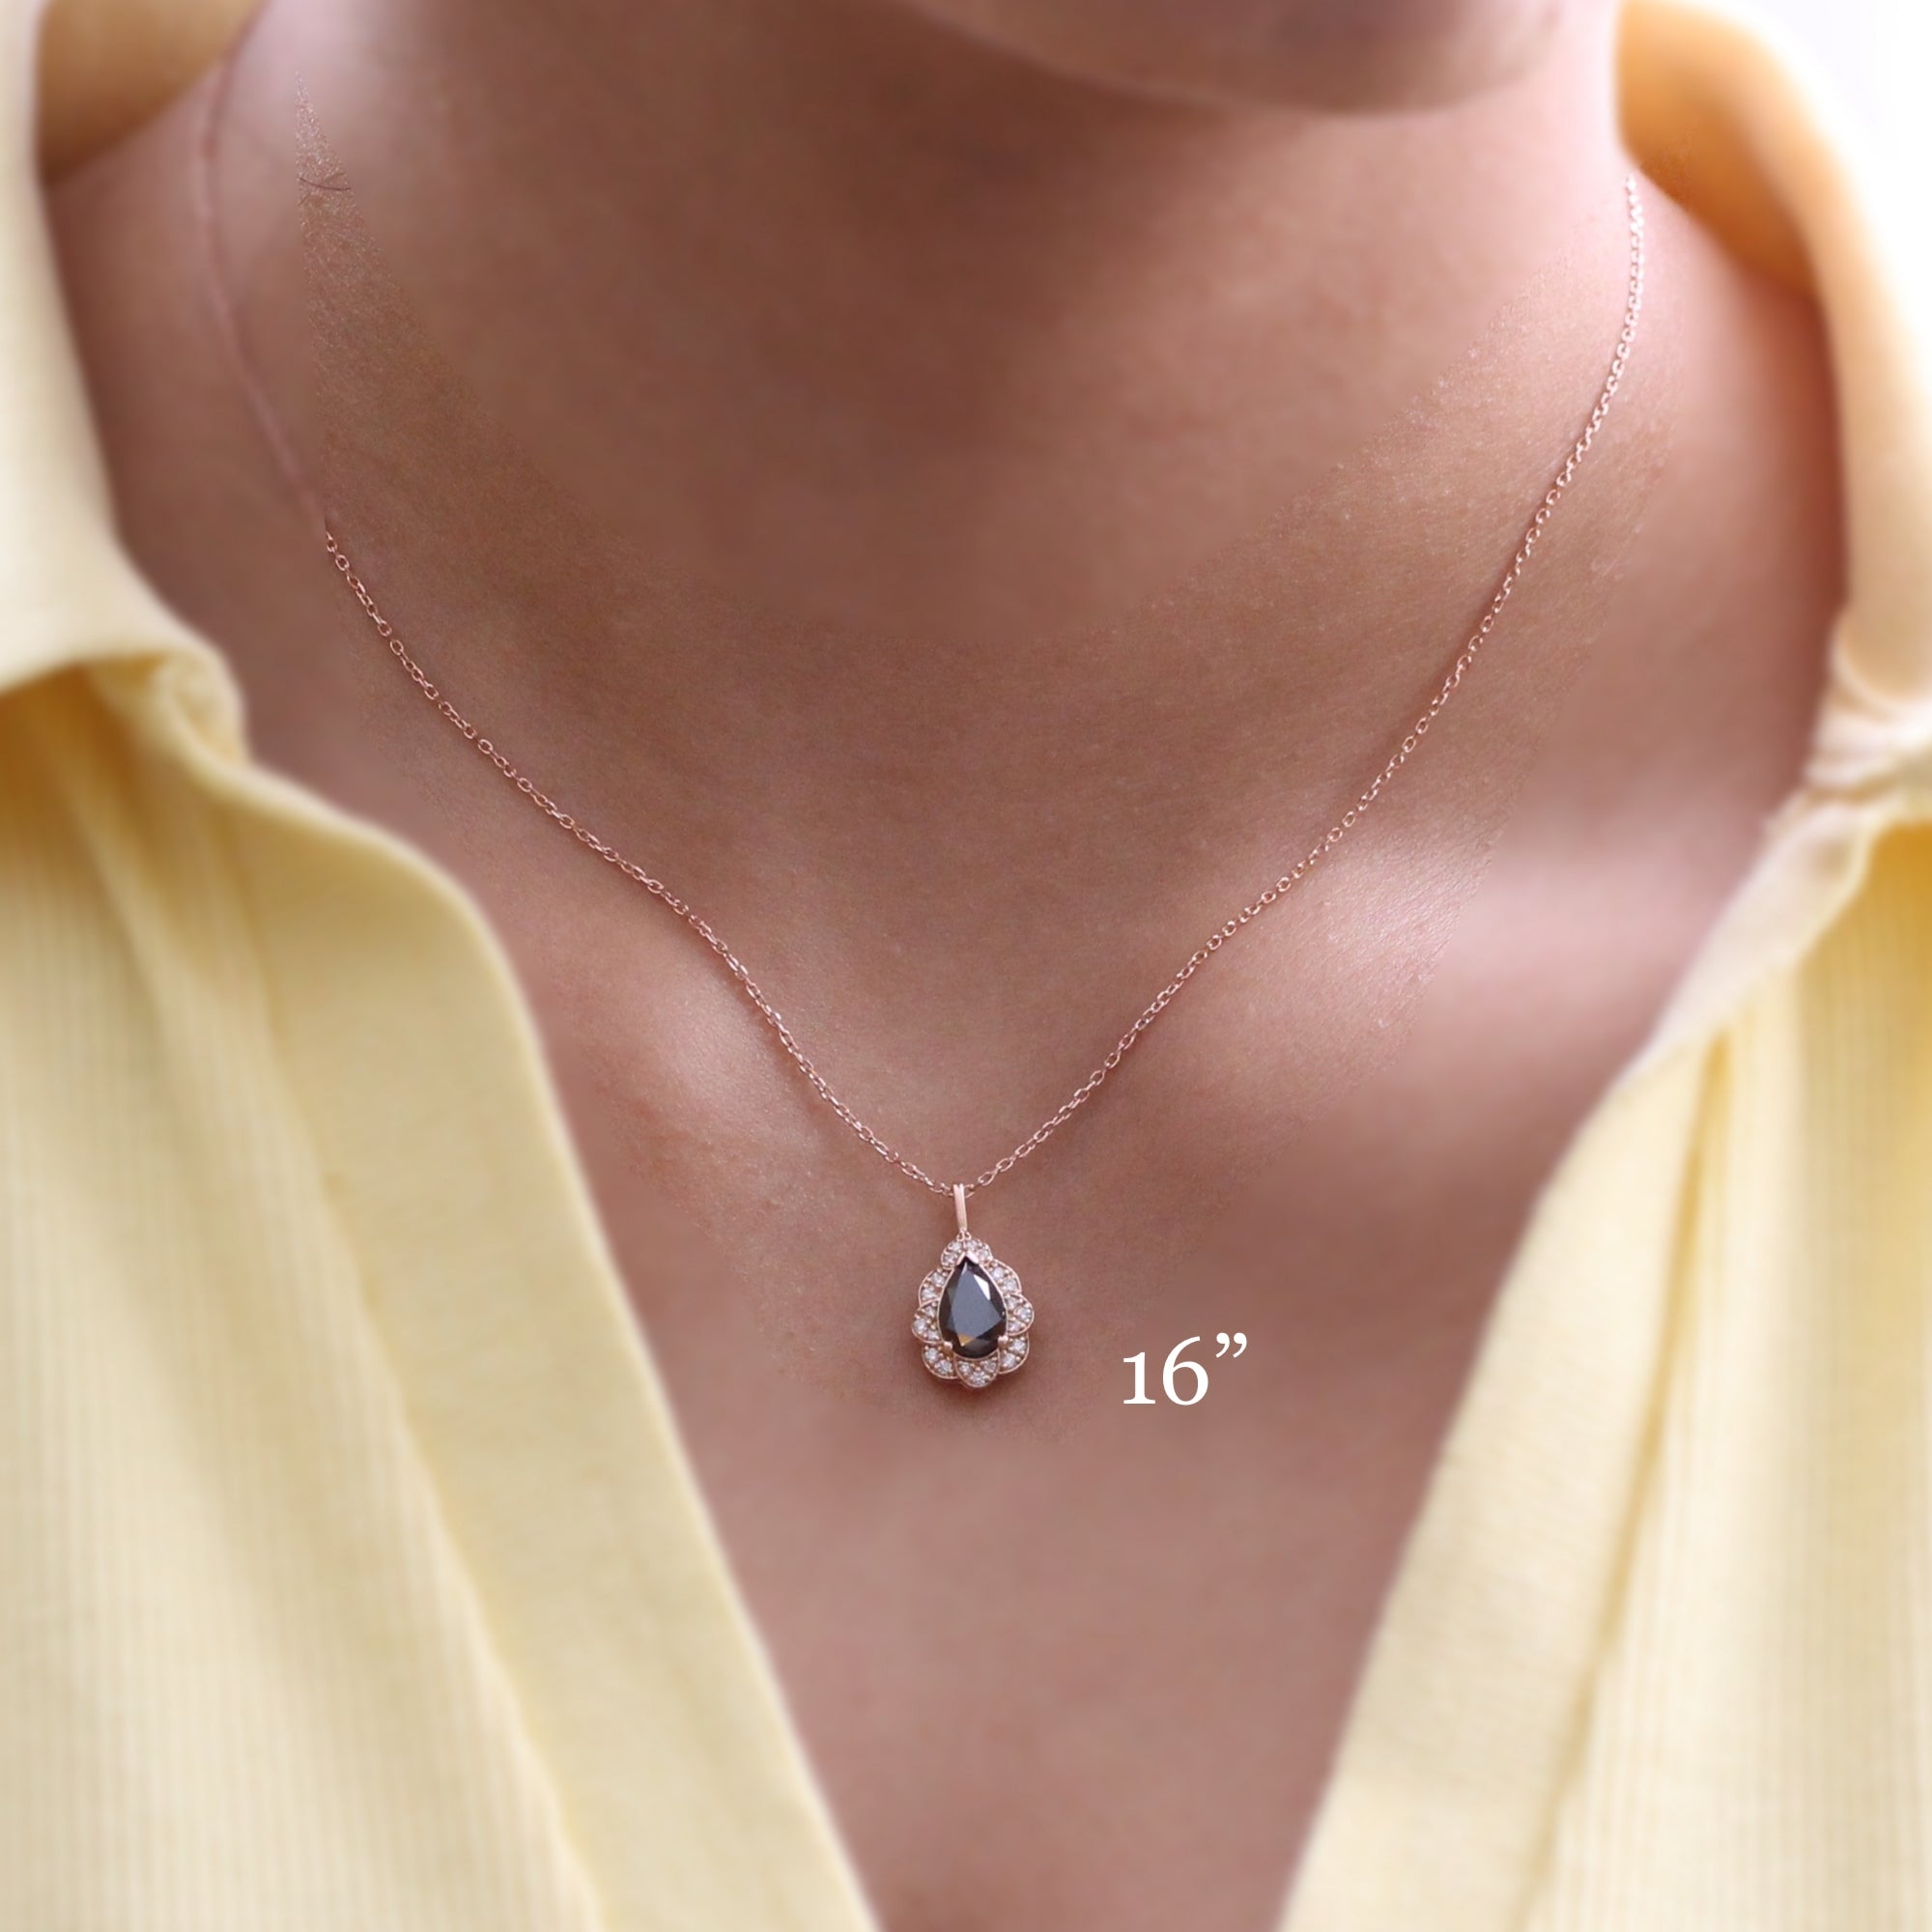 Pear black diamond necklace rose gold vintage style black diamond drop pendant necklace la more design jewelry